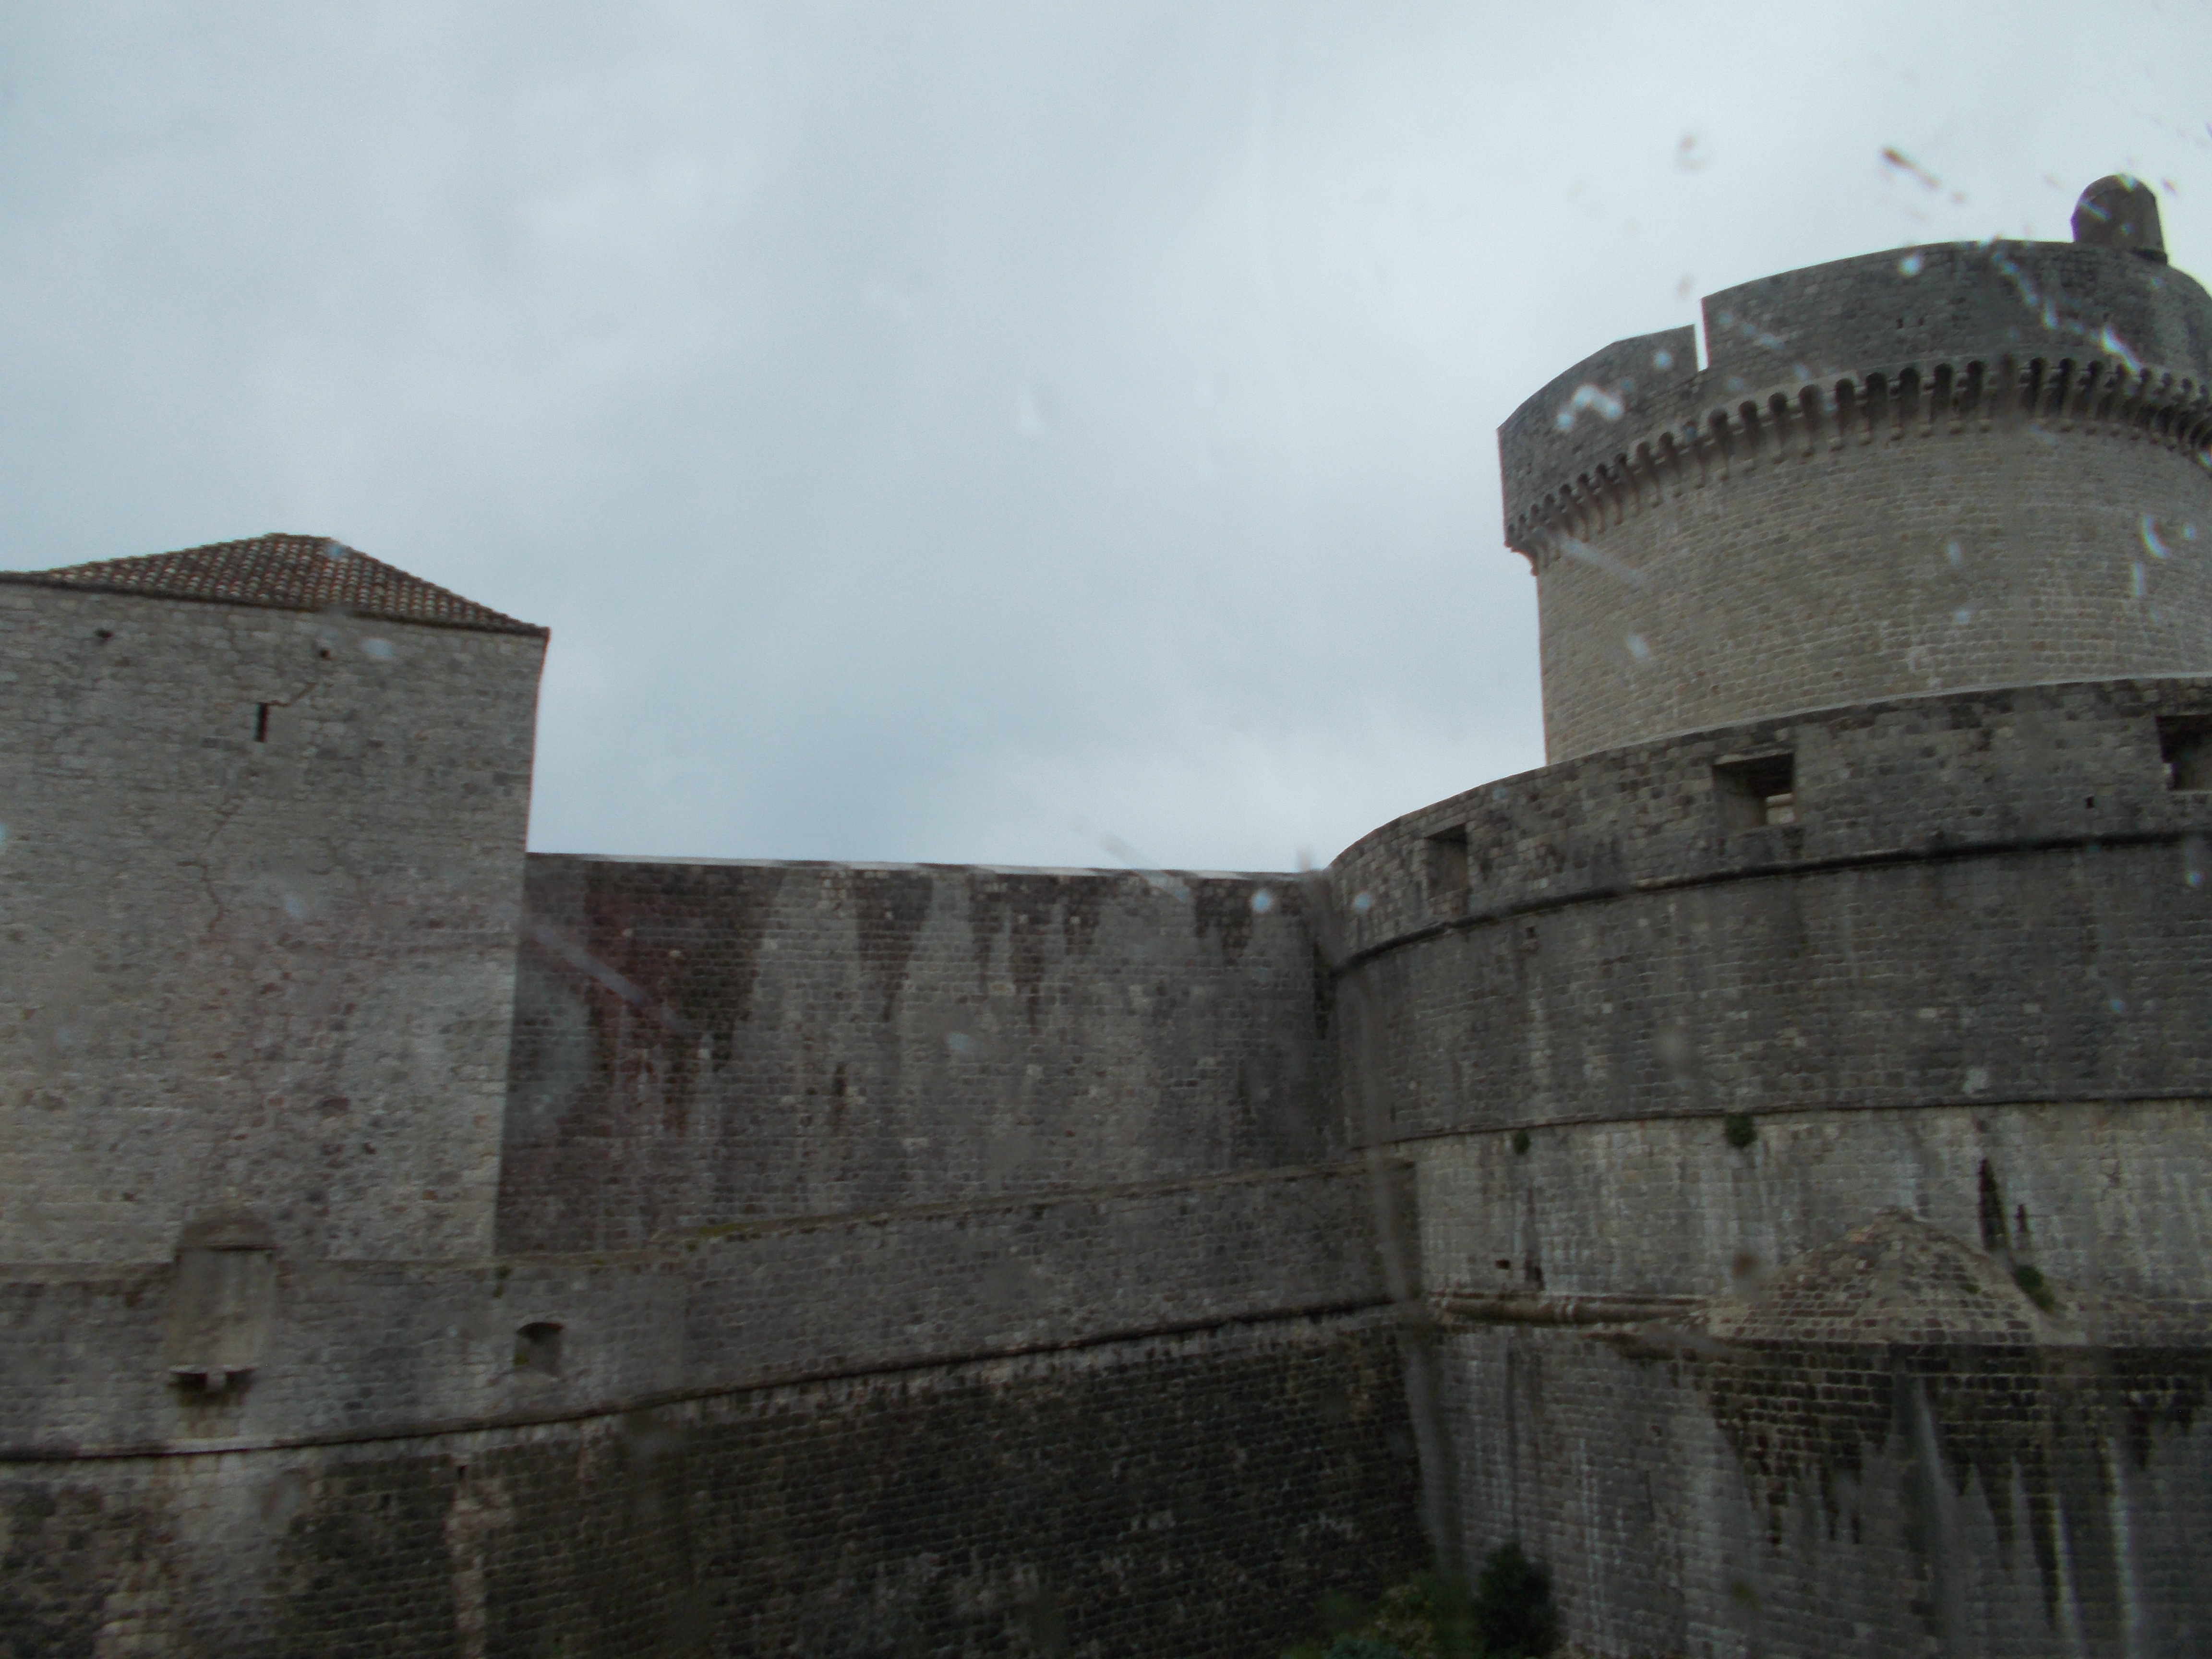 Very Rainy Day in Dubrovnik